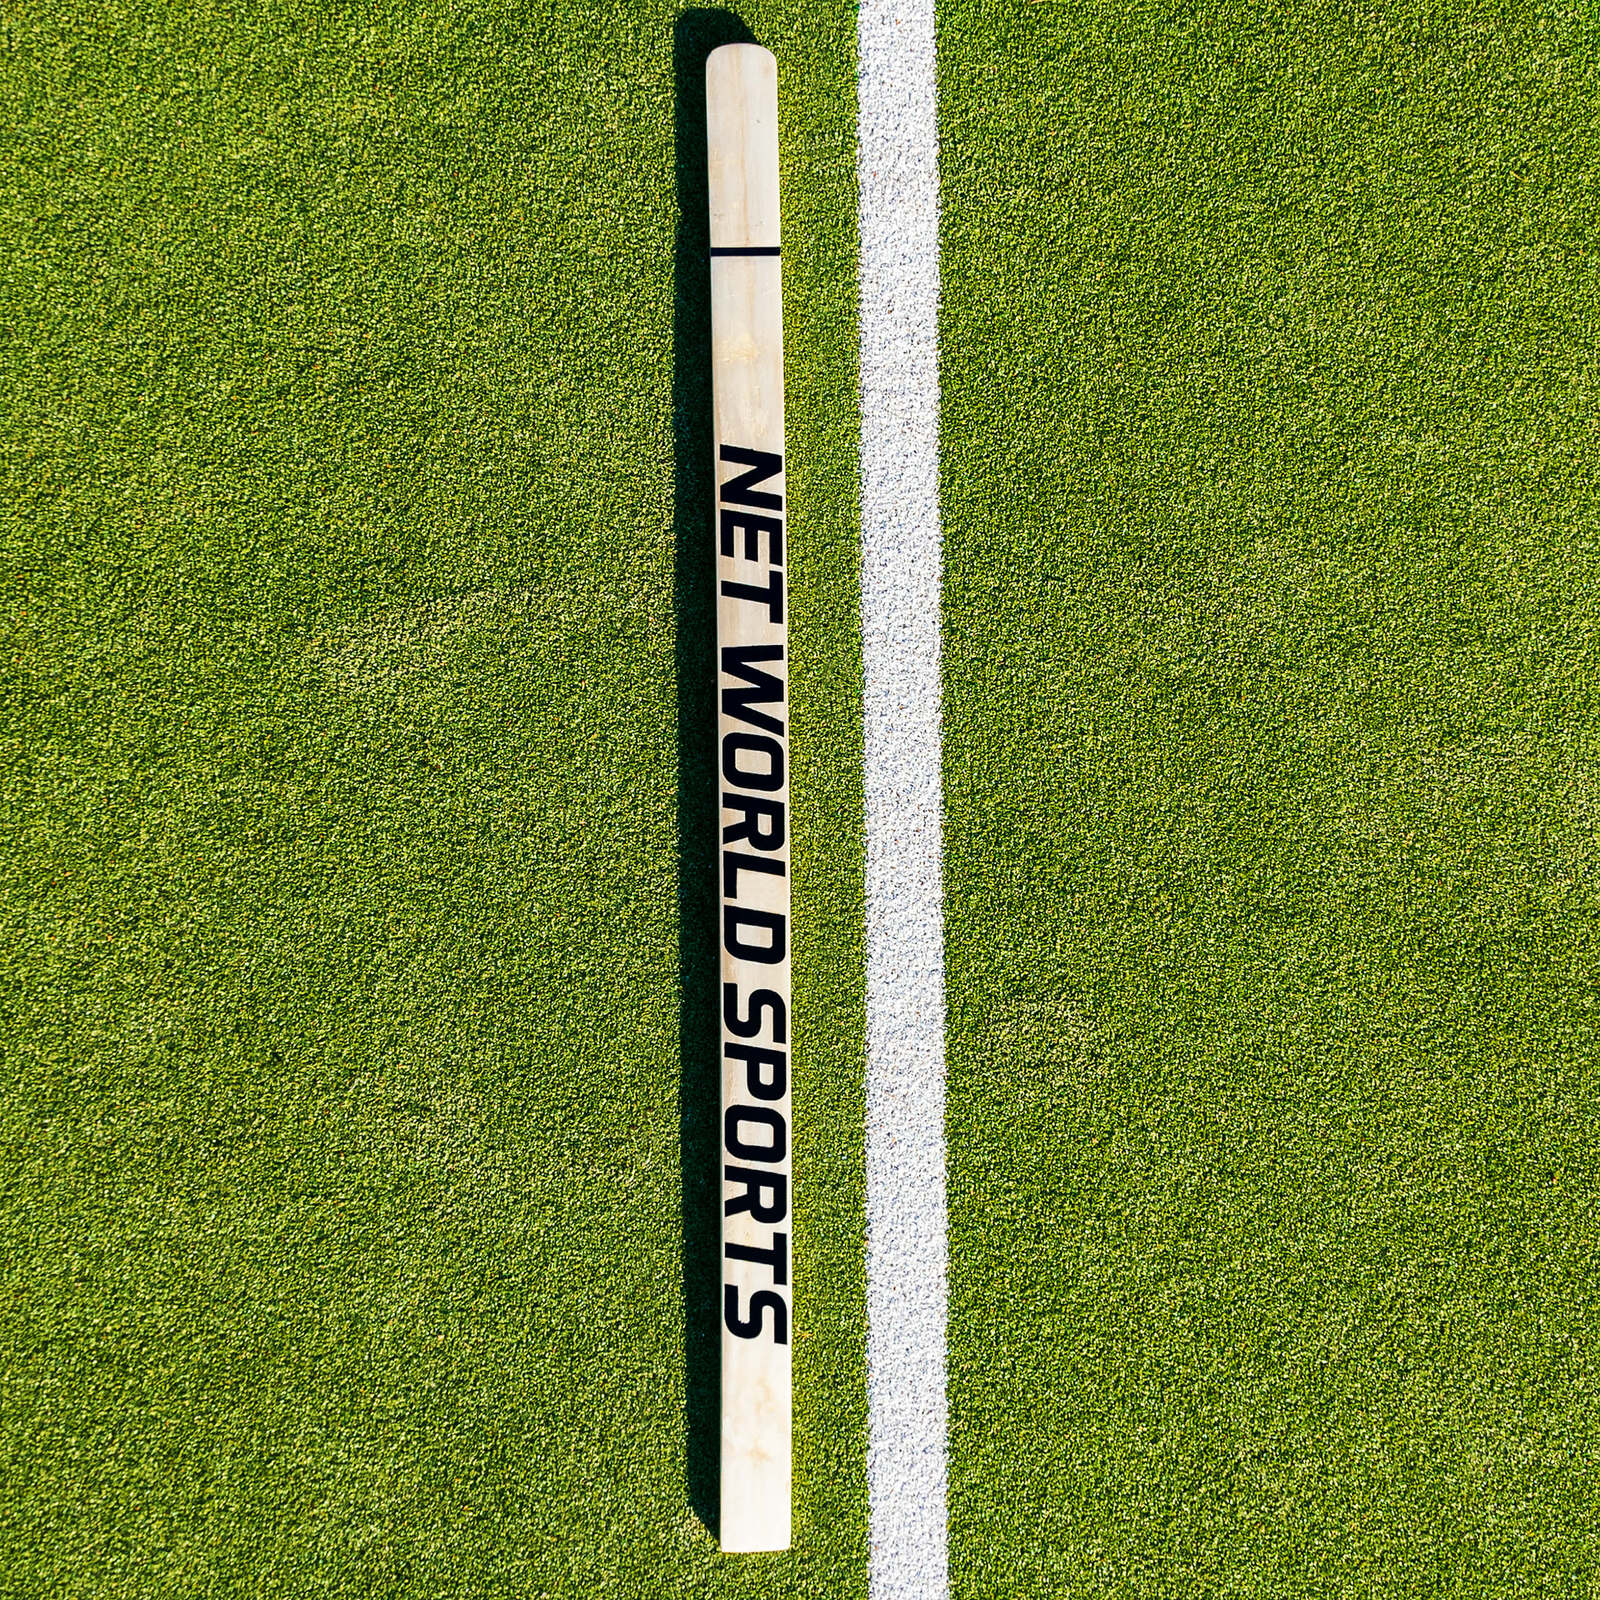 Tennis Net Measuring Stick